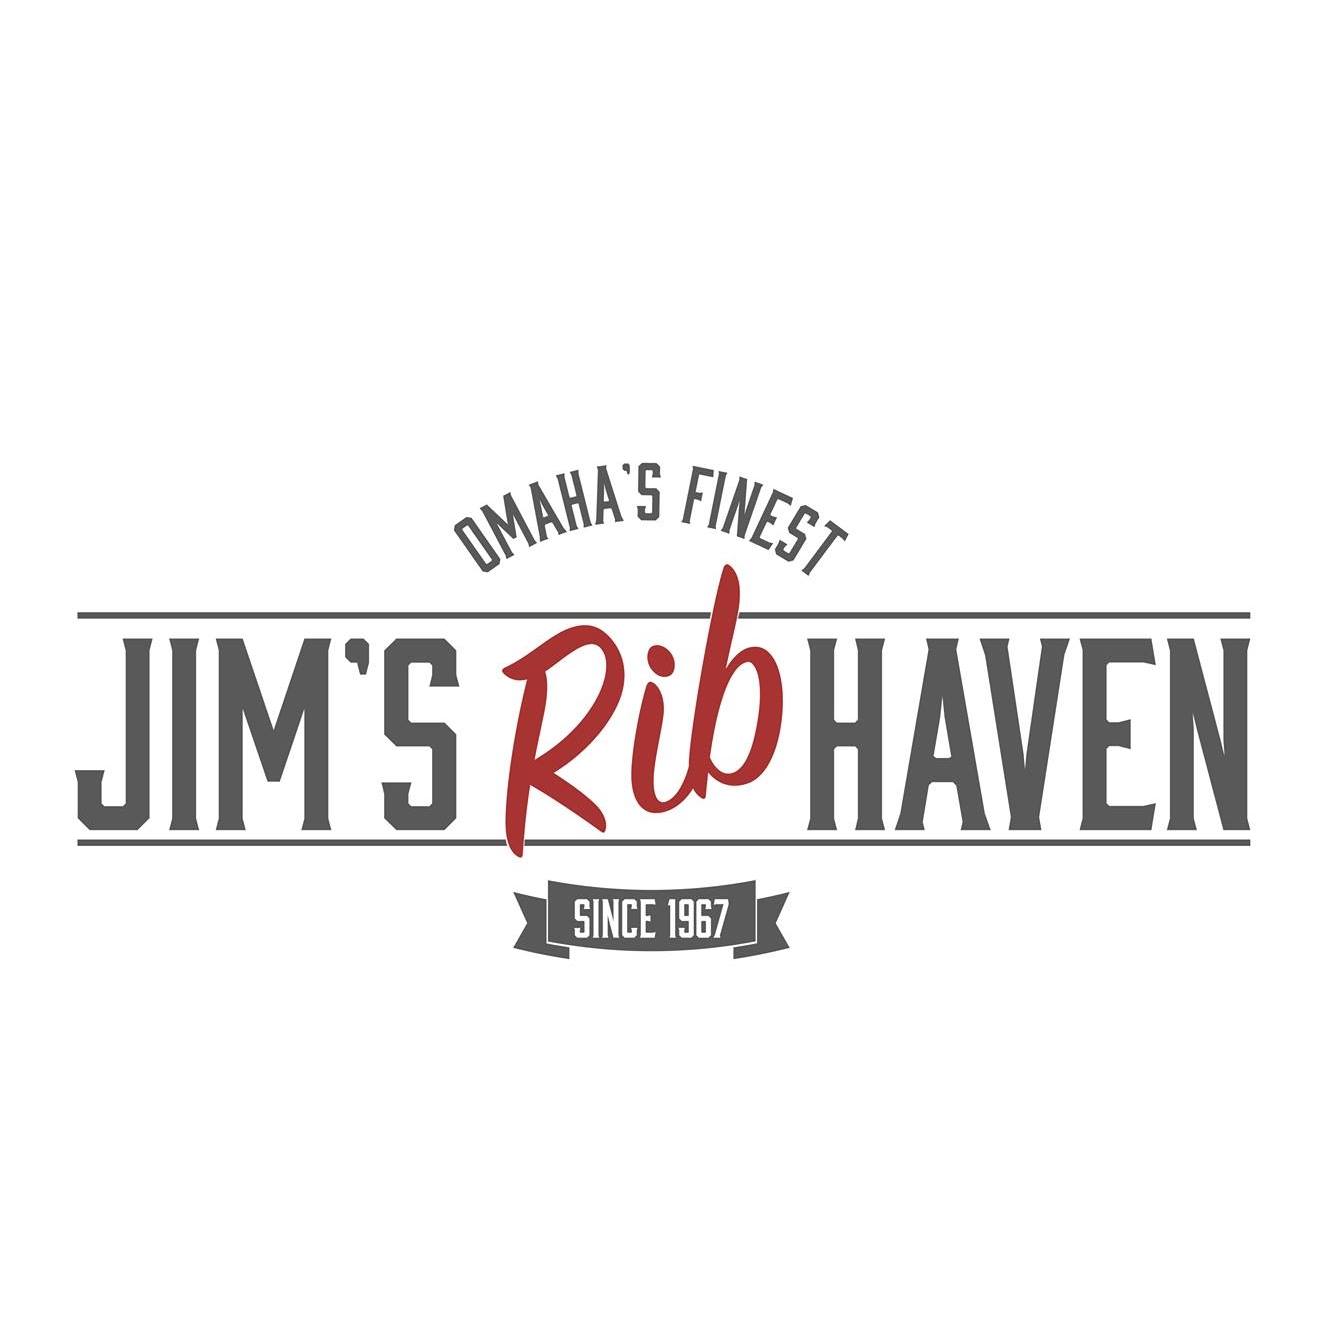 Jim’s Rib Haven